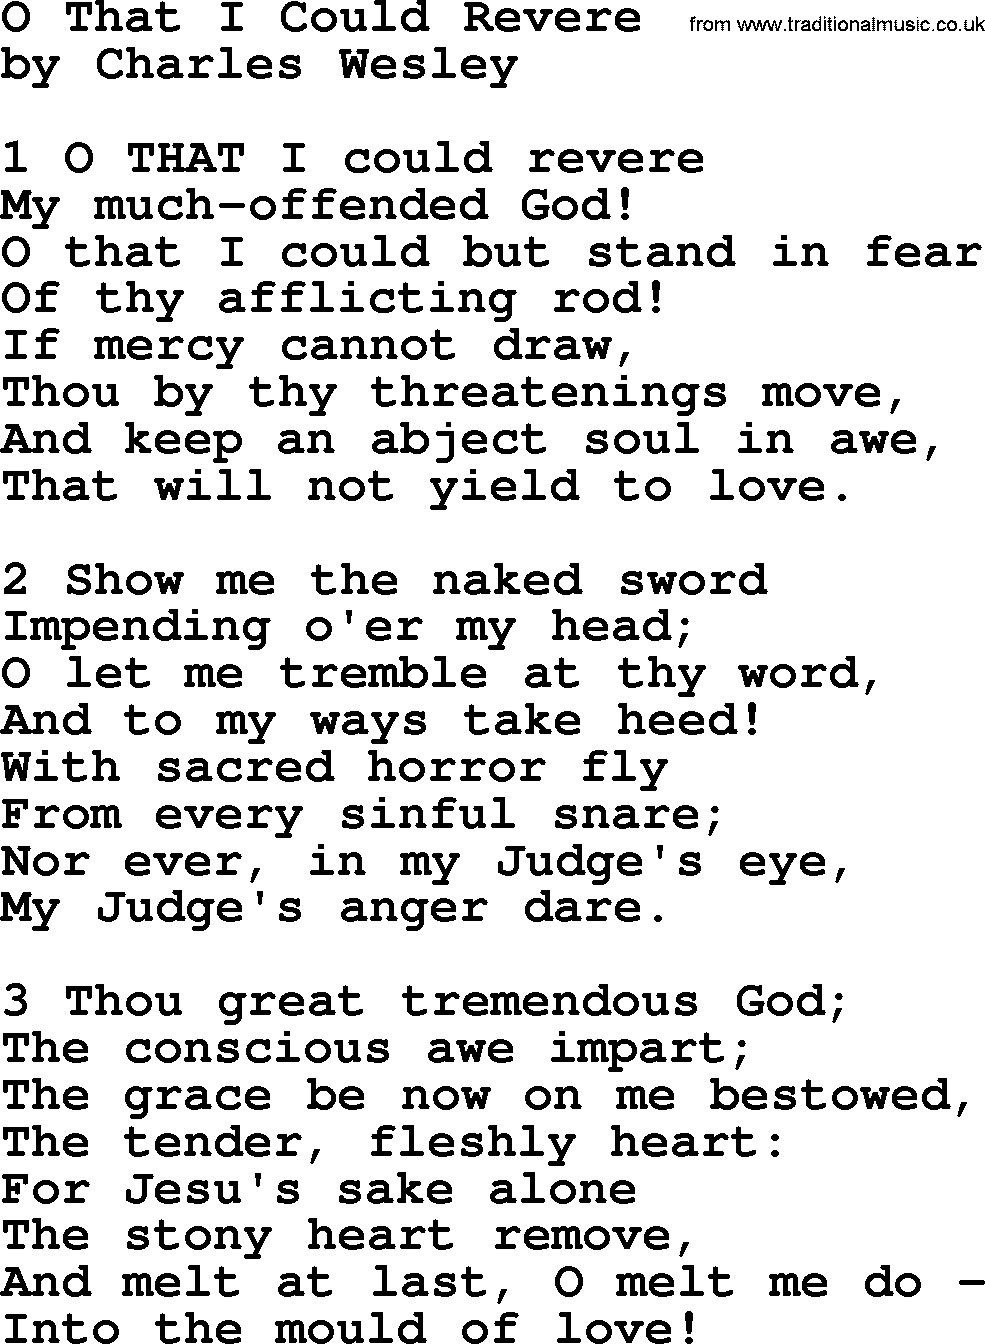 Charles Wesley hymn: O That I Could Revere, lyrics